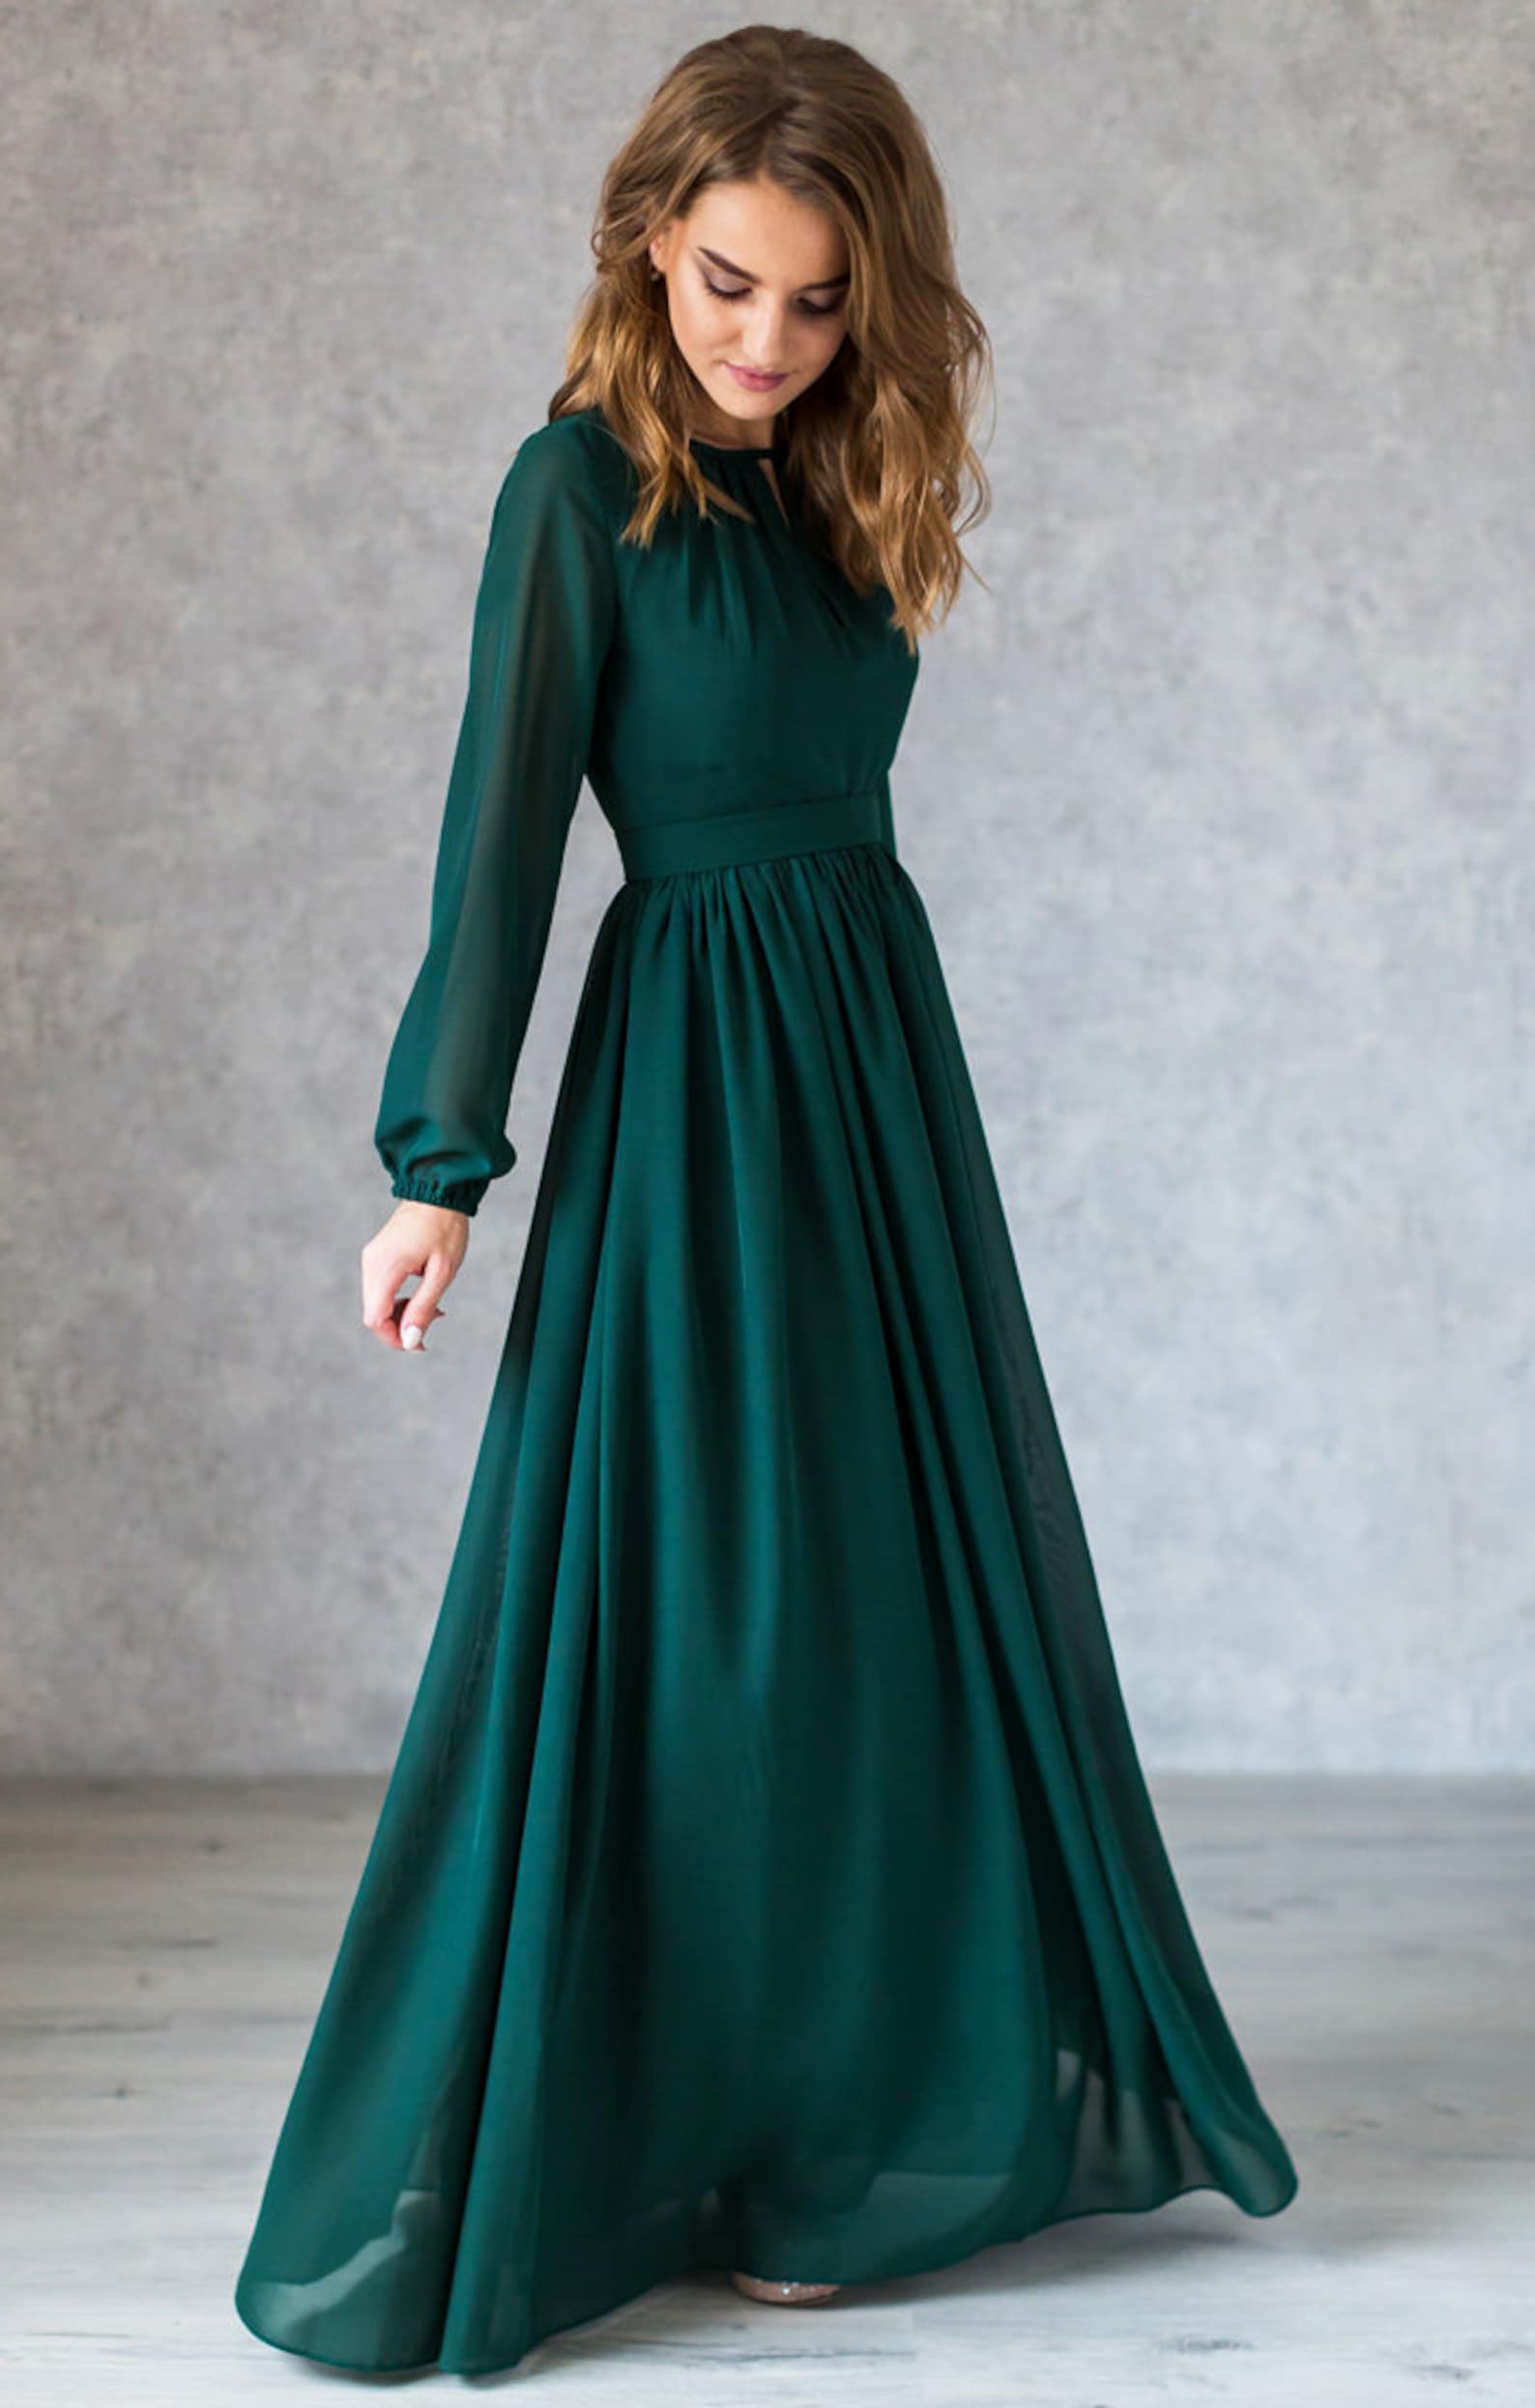 Flowy Emerald Green Dress With Long Sleeves / Green Chiffon - Etsy ...